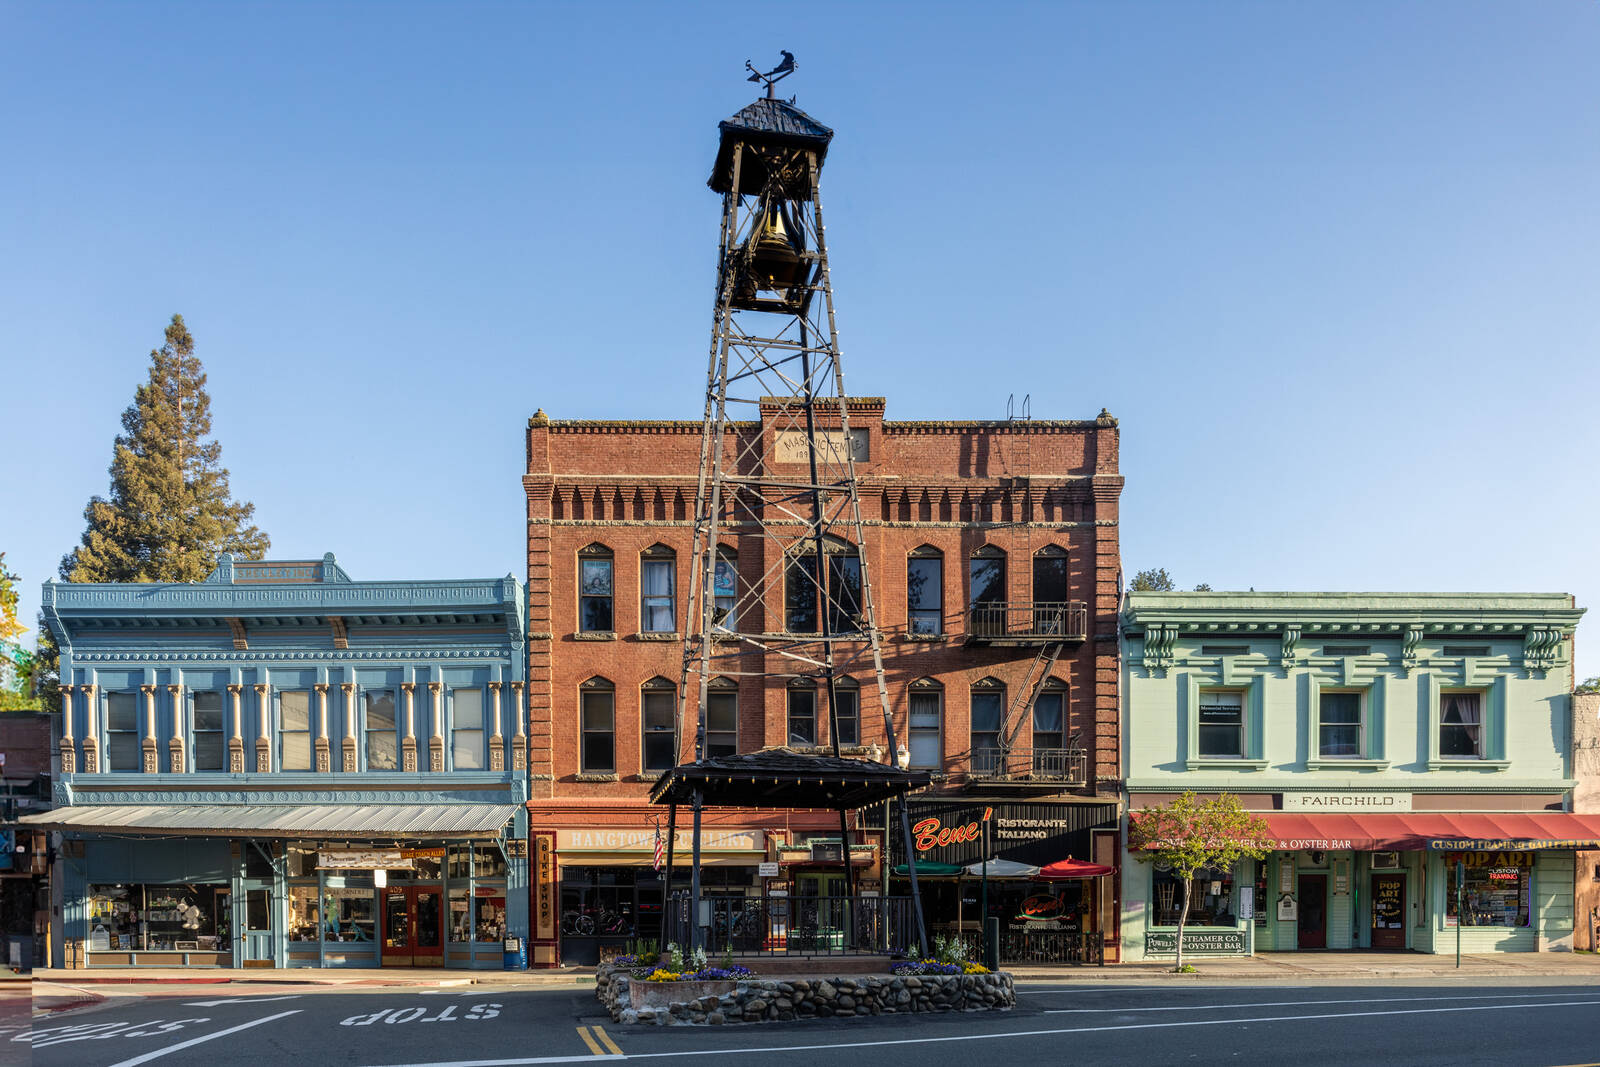 Image of Main Street, Placerville, CA by Karen Schmautz